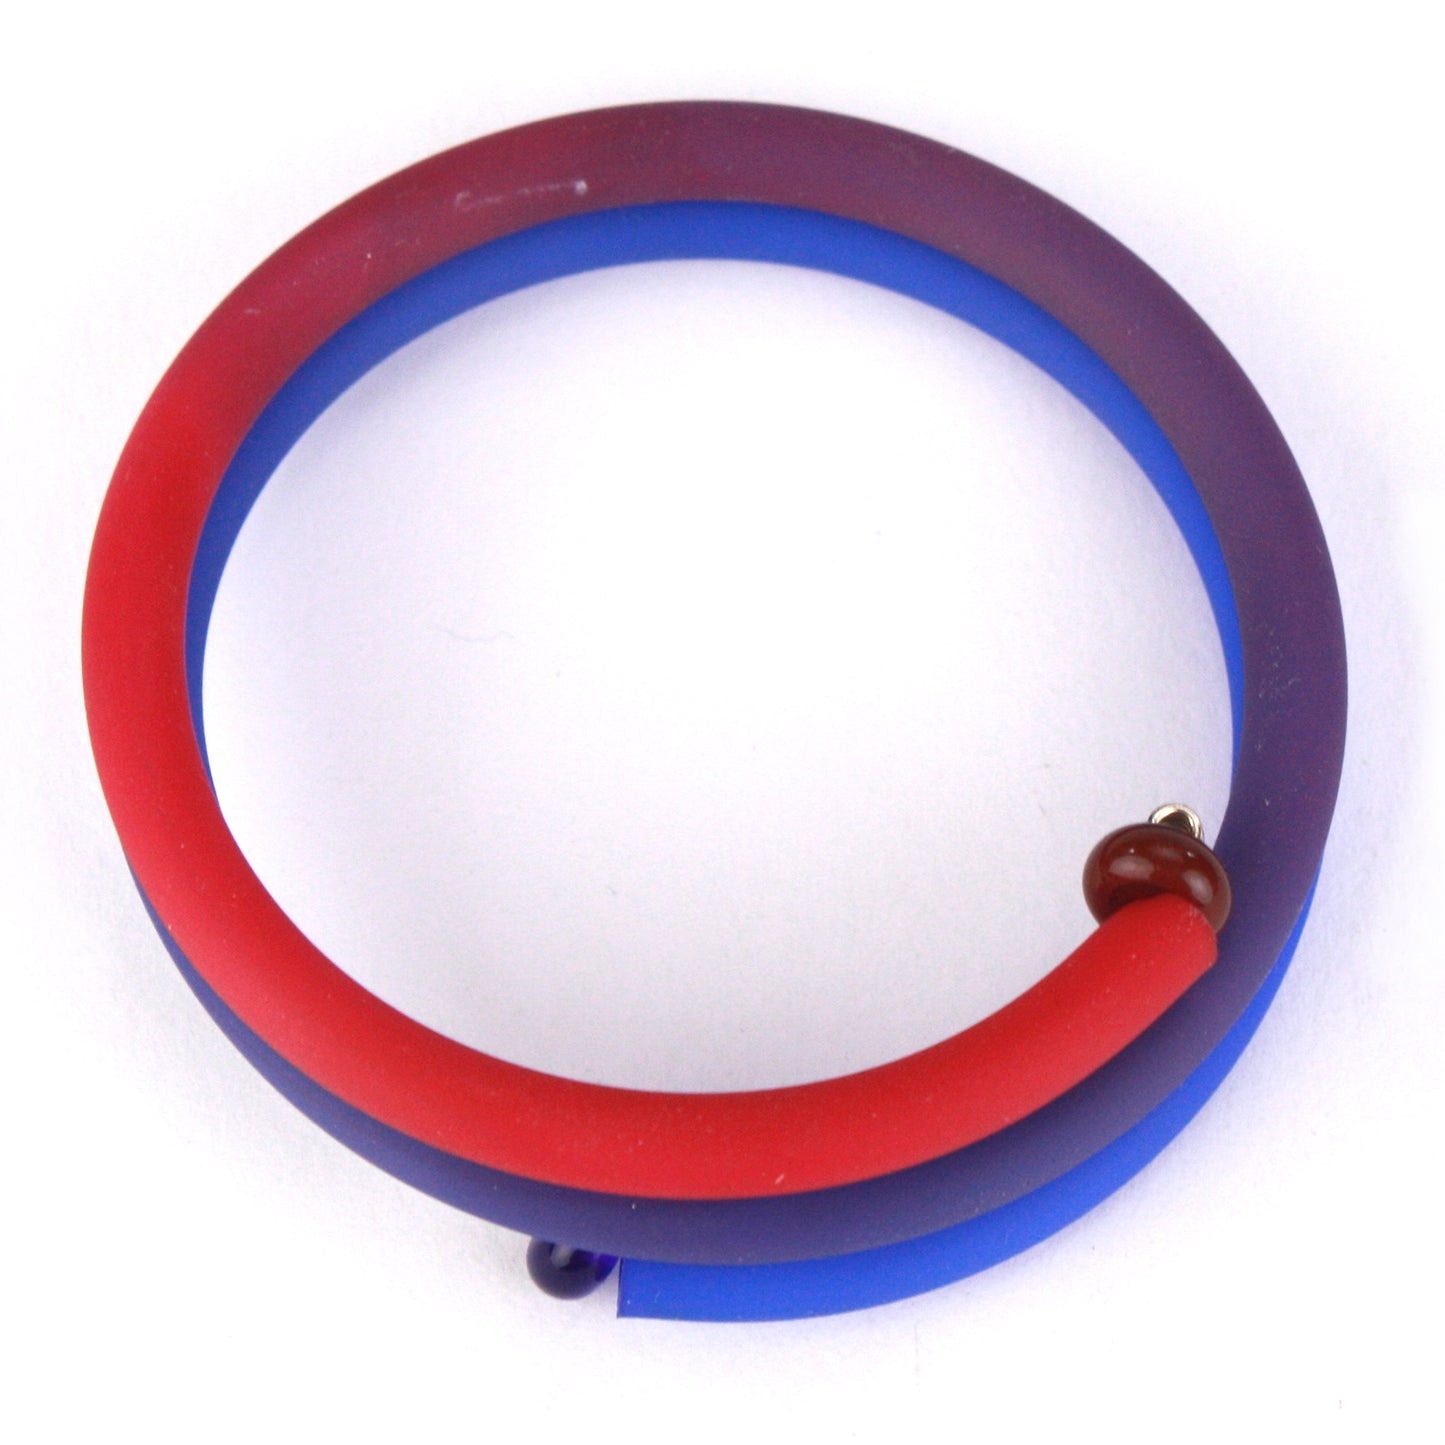 Double wrap bracelet - red to dark blue